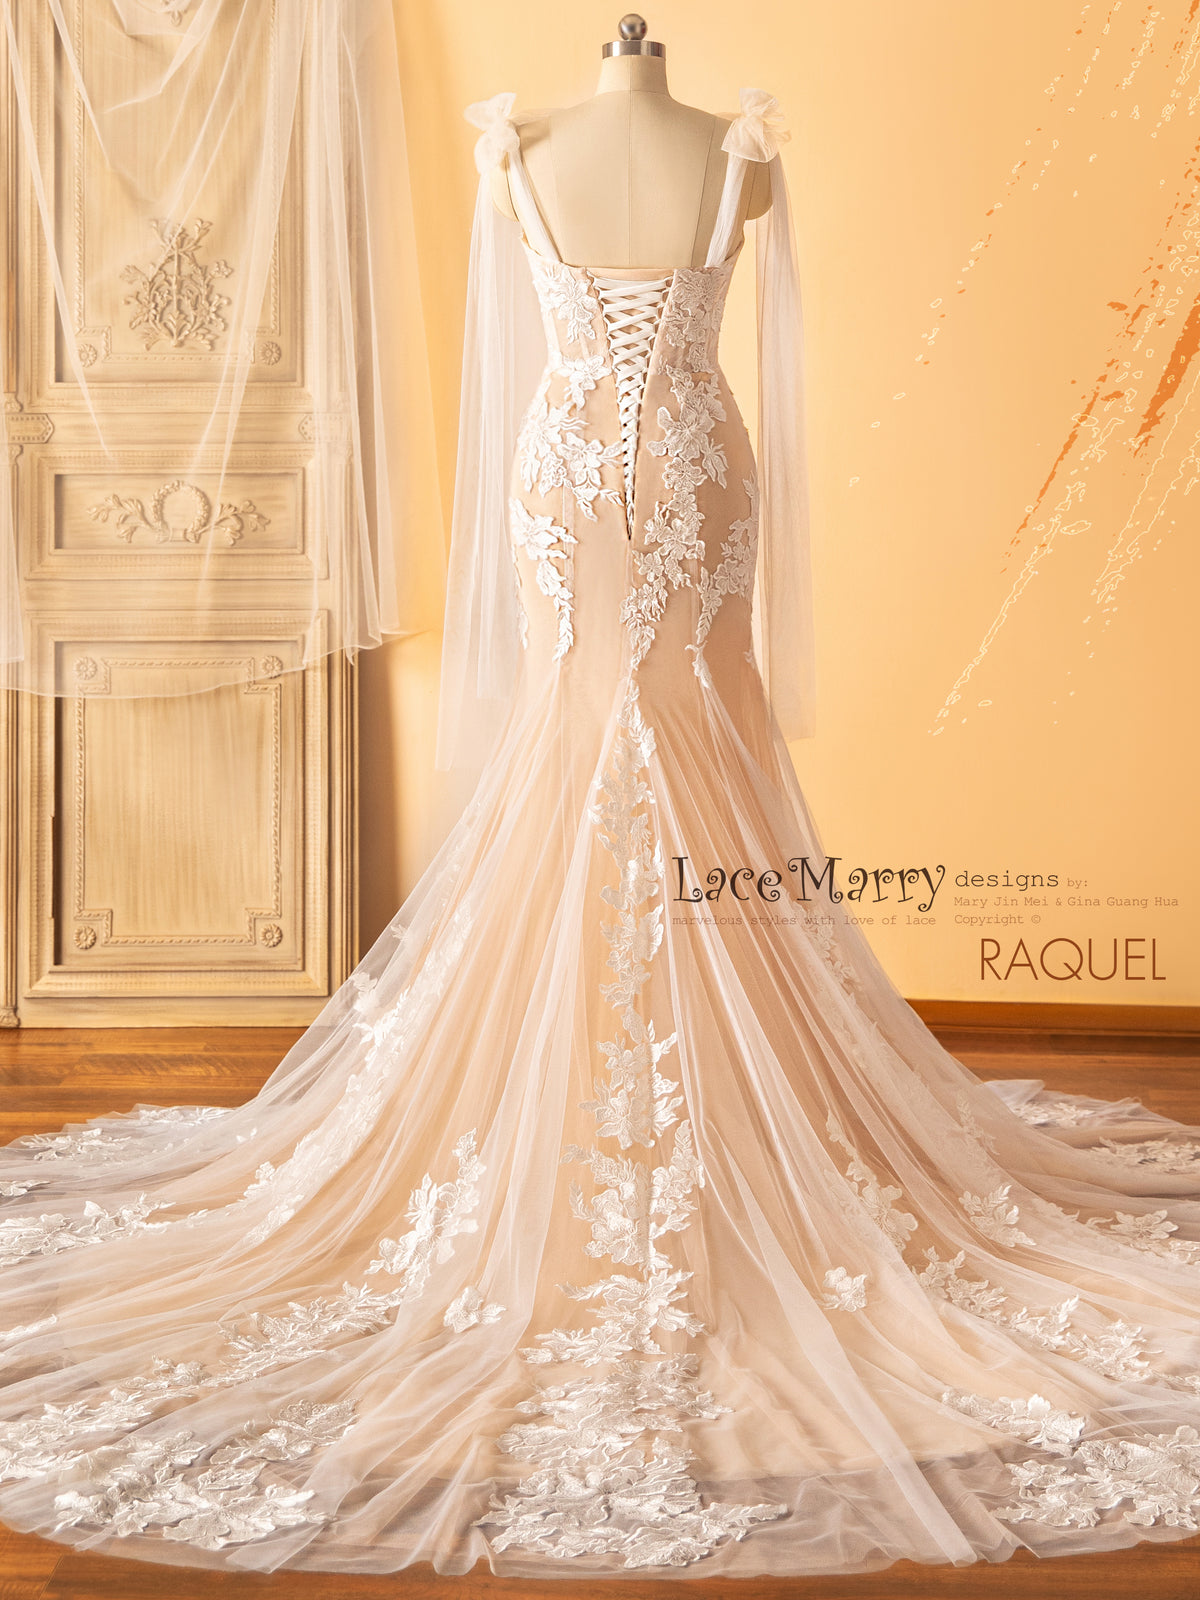 RAQUEL / Breathtaking Wedding Dress in Amazing Silhouette